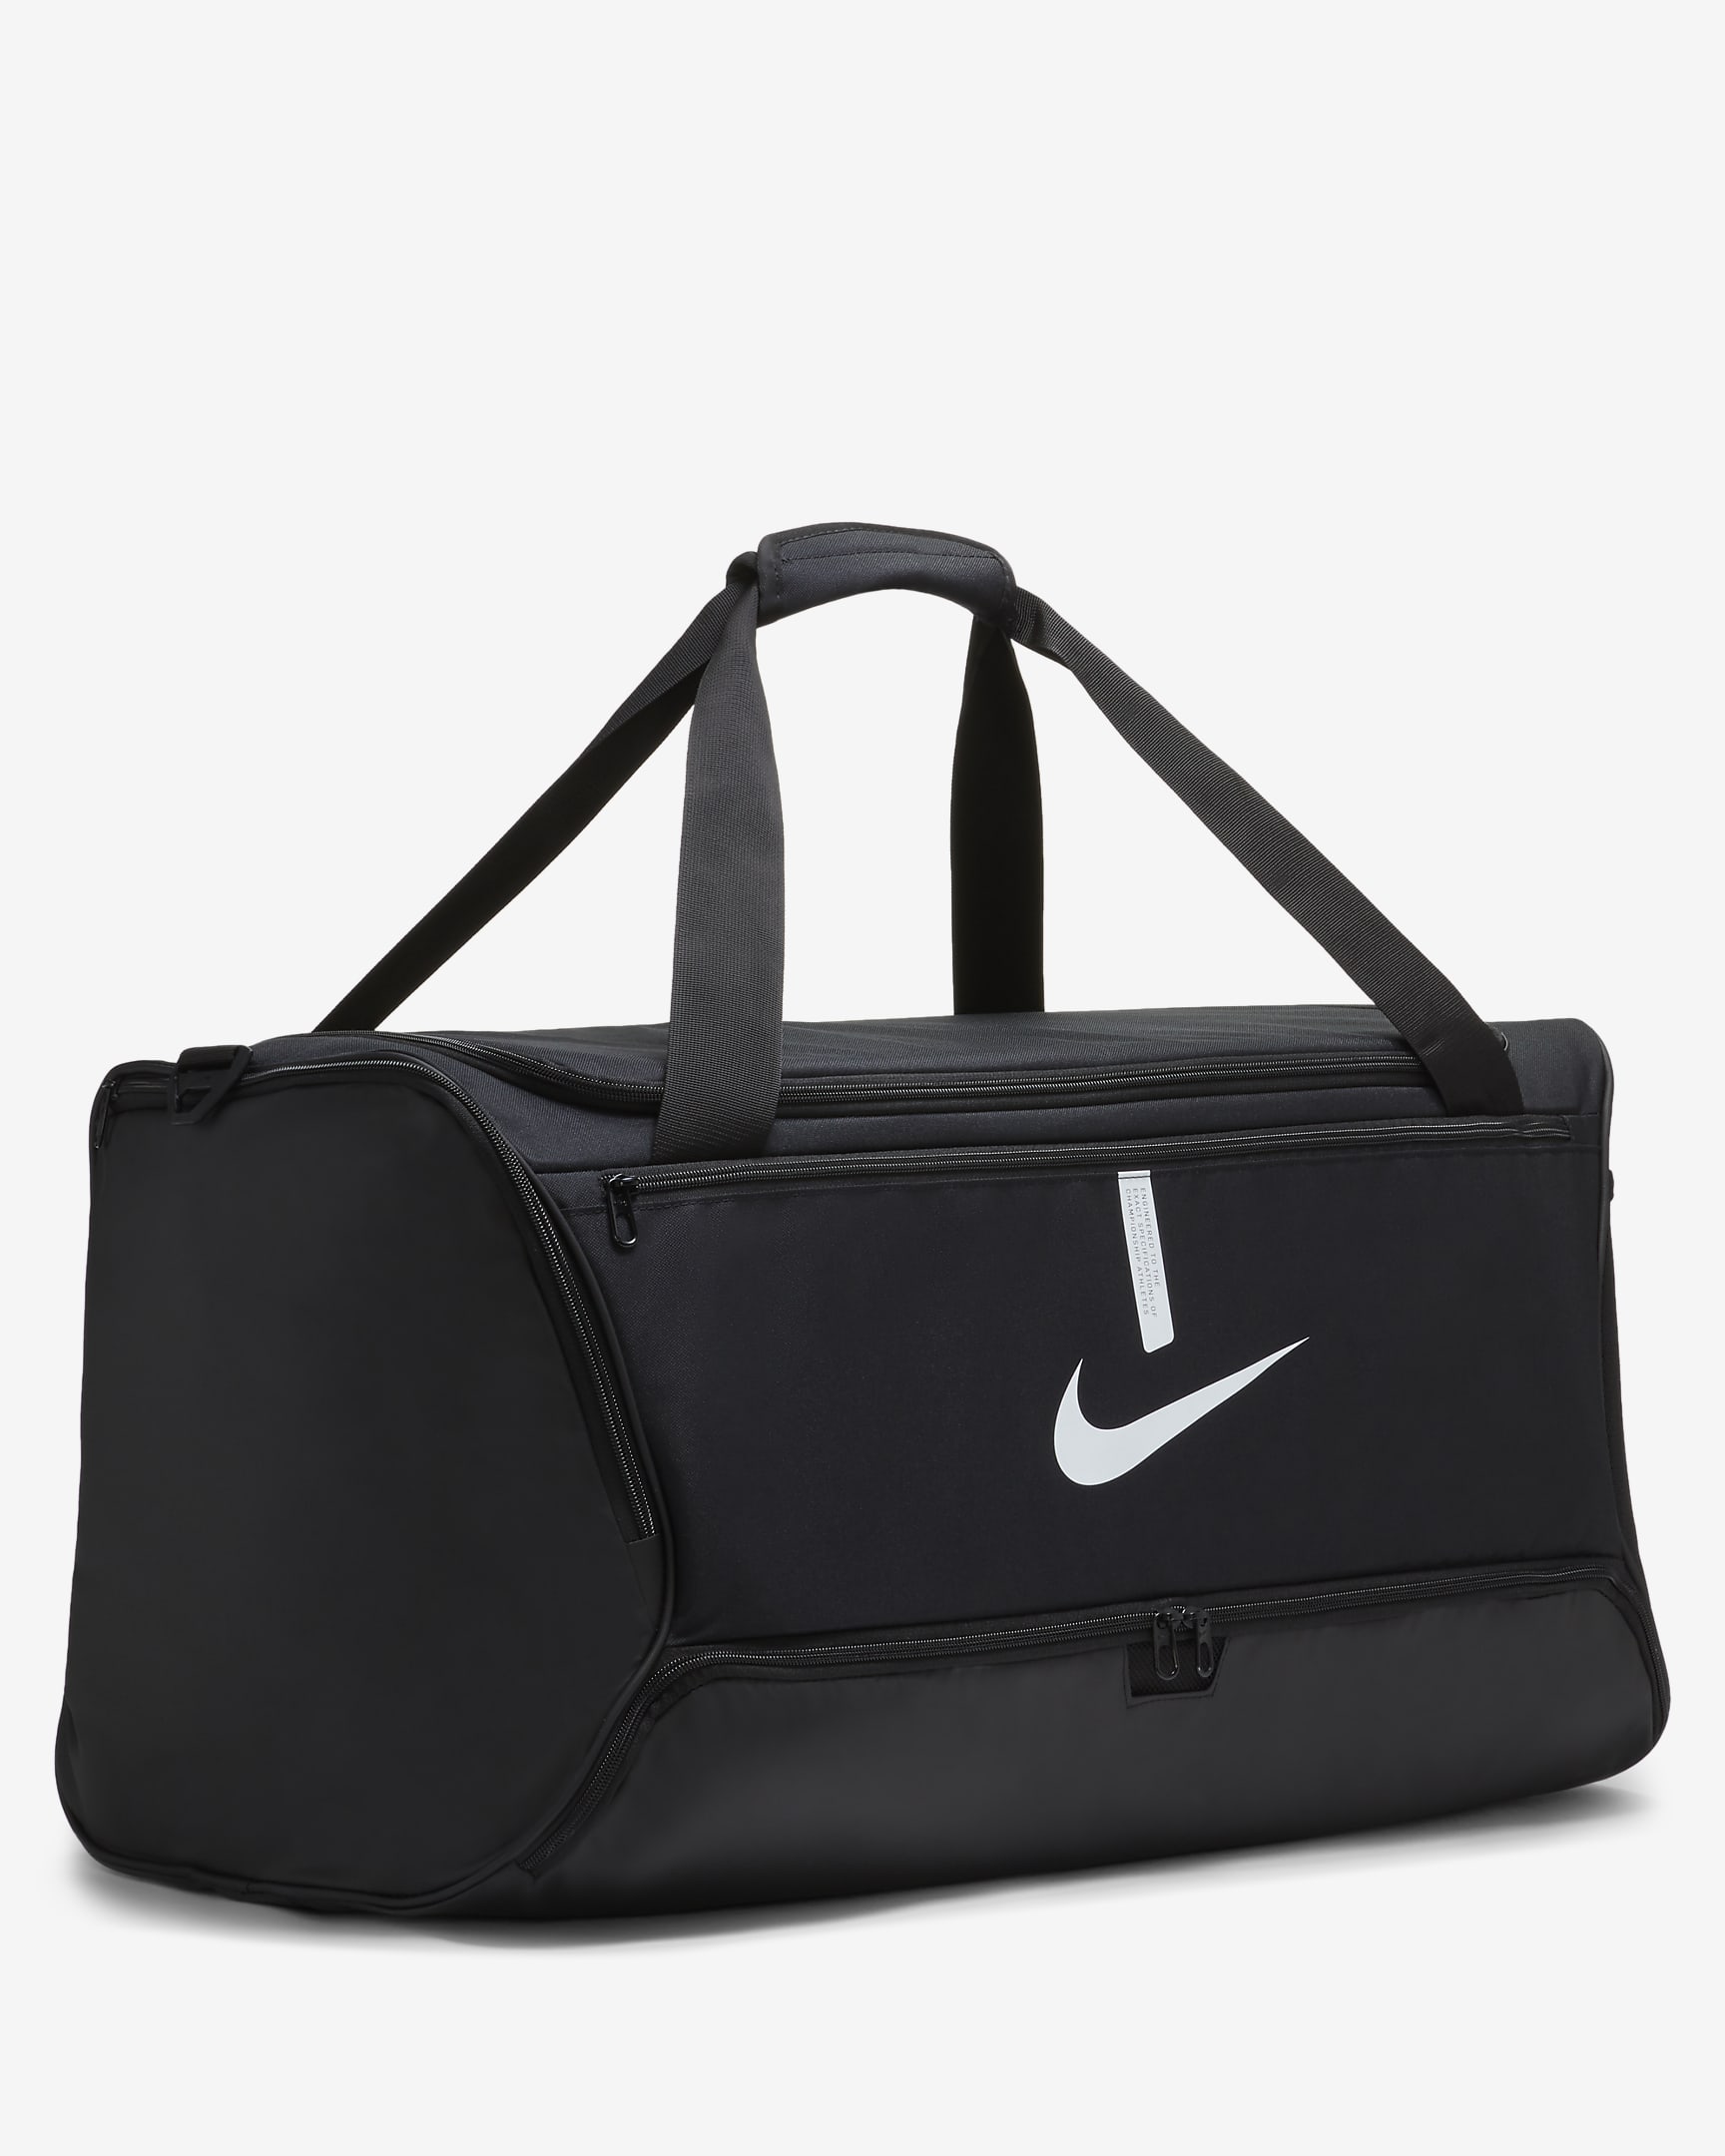 Nike Academy Team Football Duffel Bag (Large, 95L). Nike DK